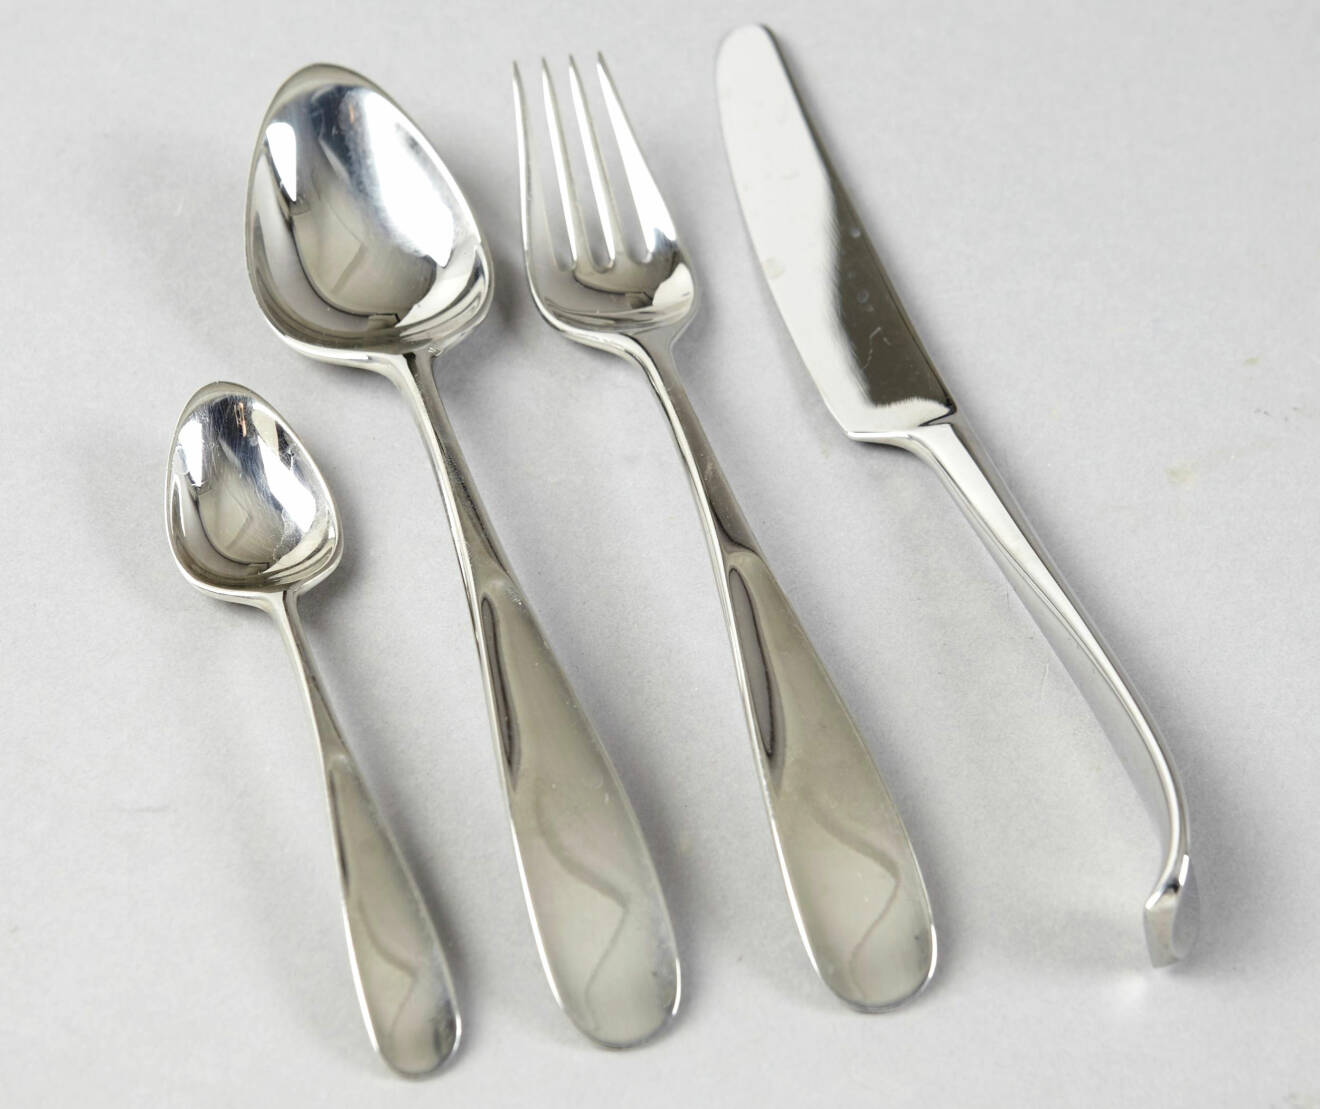 Tesked, matsked, gaffel och kniv i silver i serien Vivianne av Torun Bülow-Hübe.